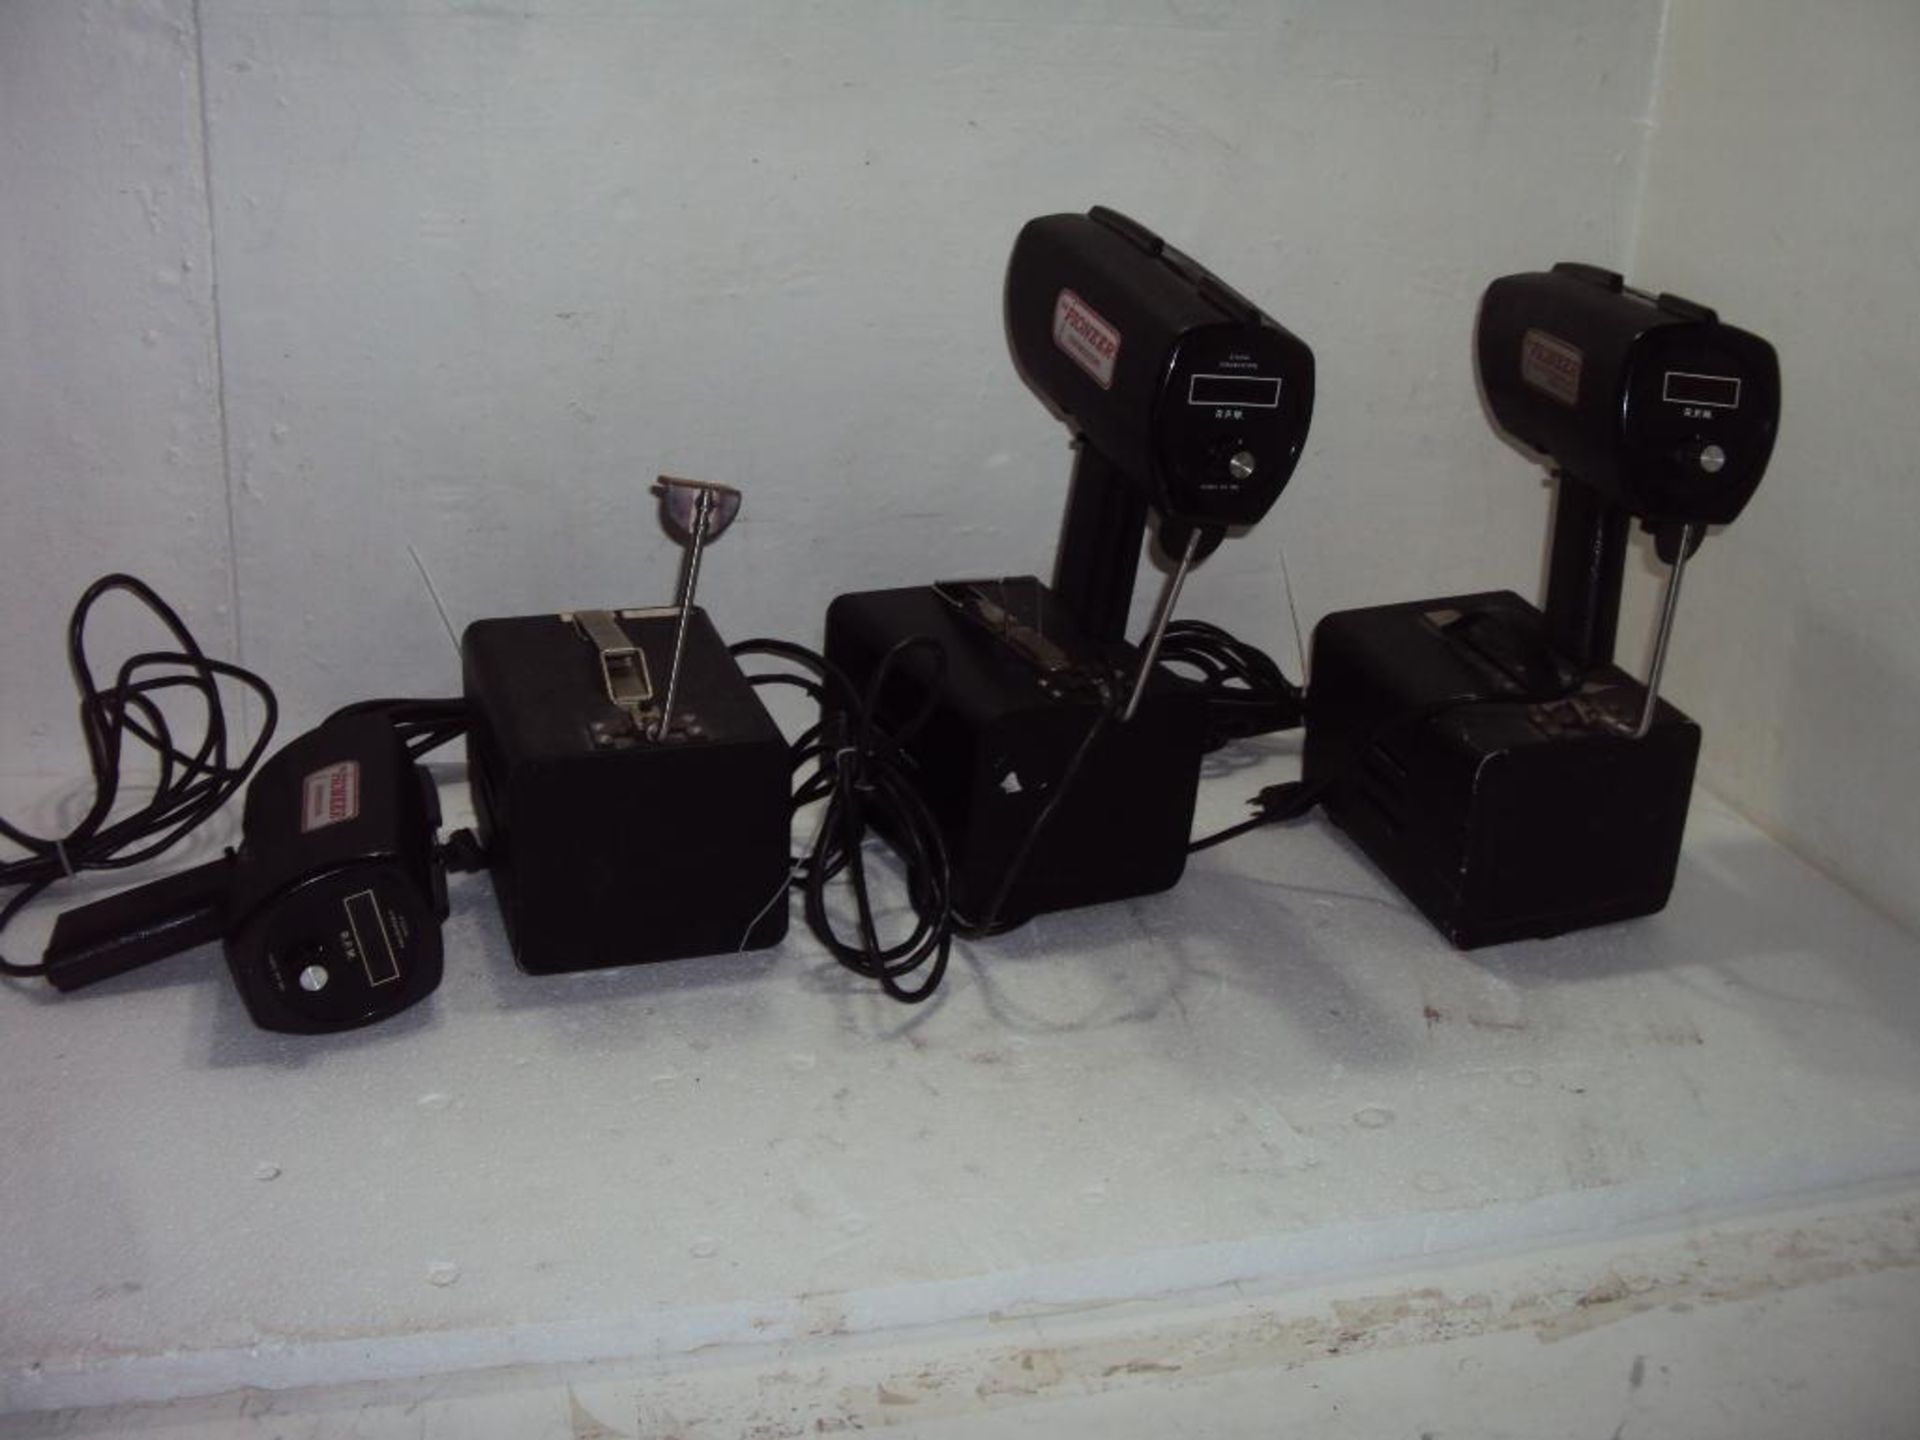 Lot of 3 Pioneer Electric Stroboscopes - Image 3 of 5